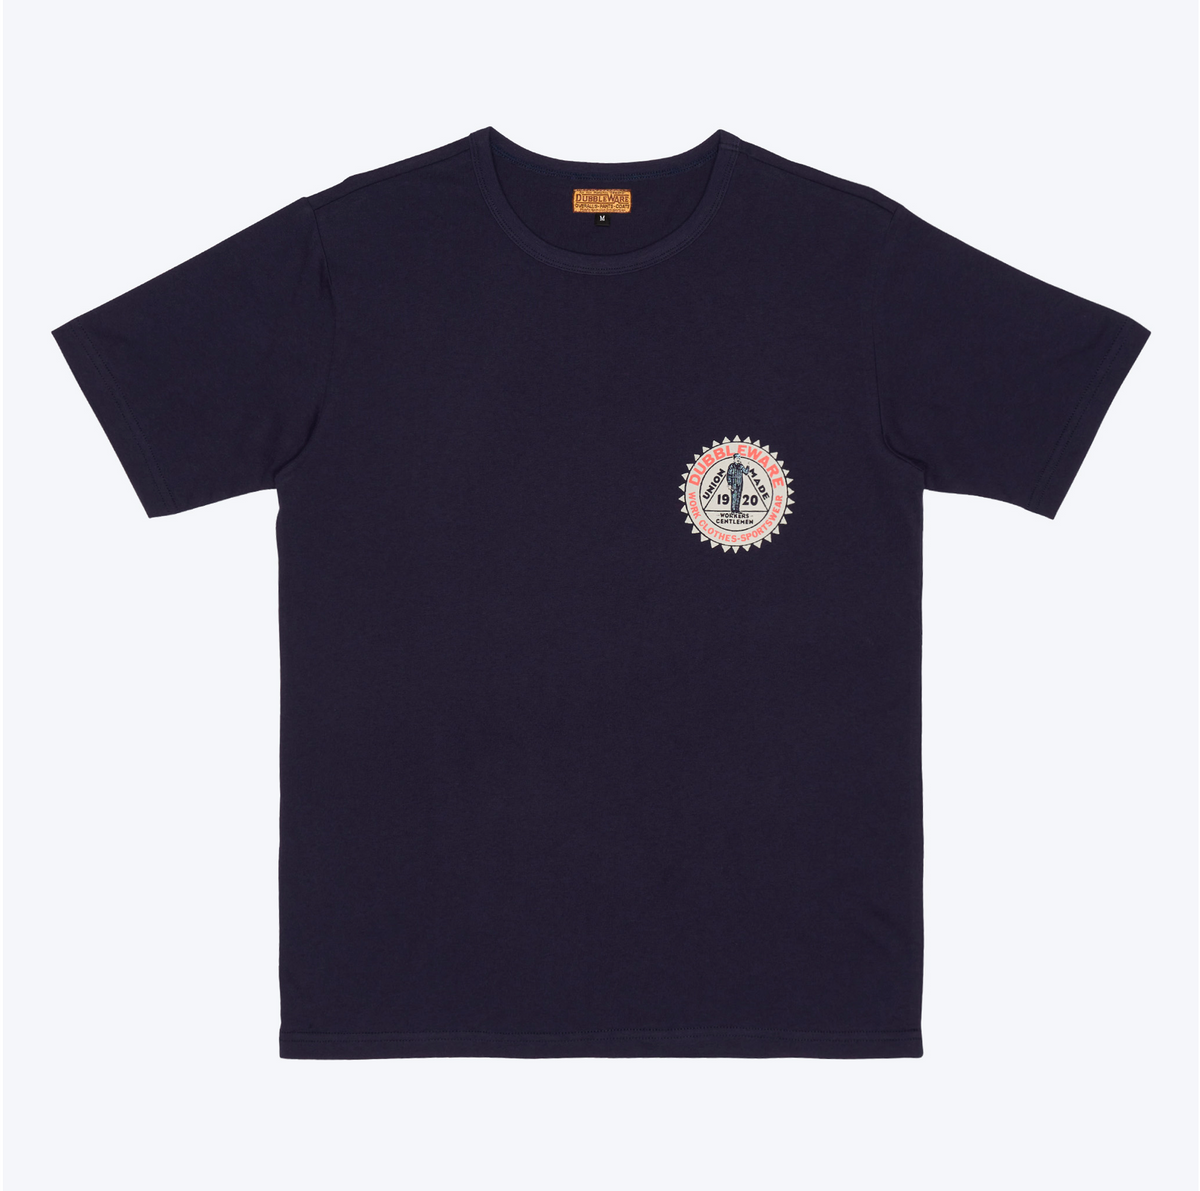 Dubbleware Gentleman T-Shirt , T-Shirts, Dubbleware, Working Title